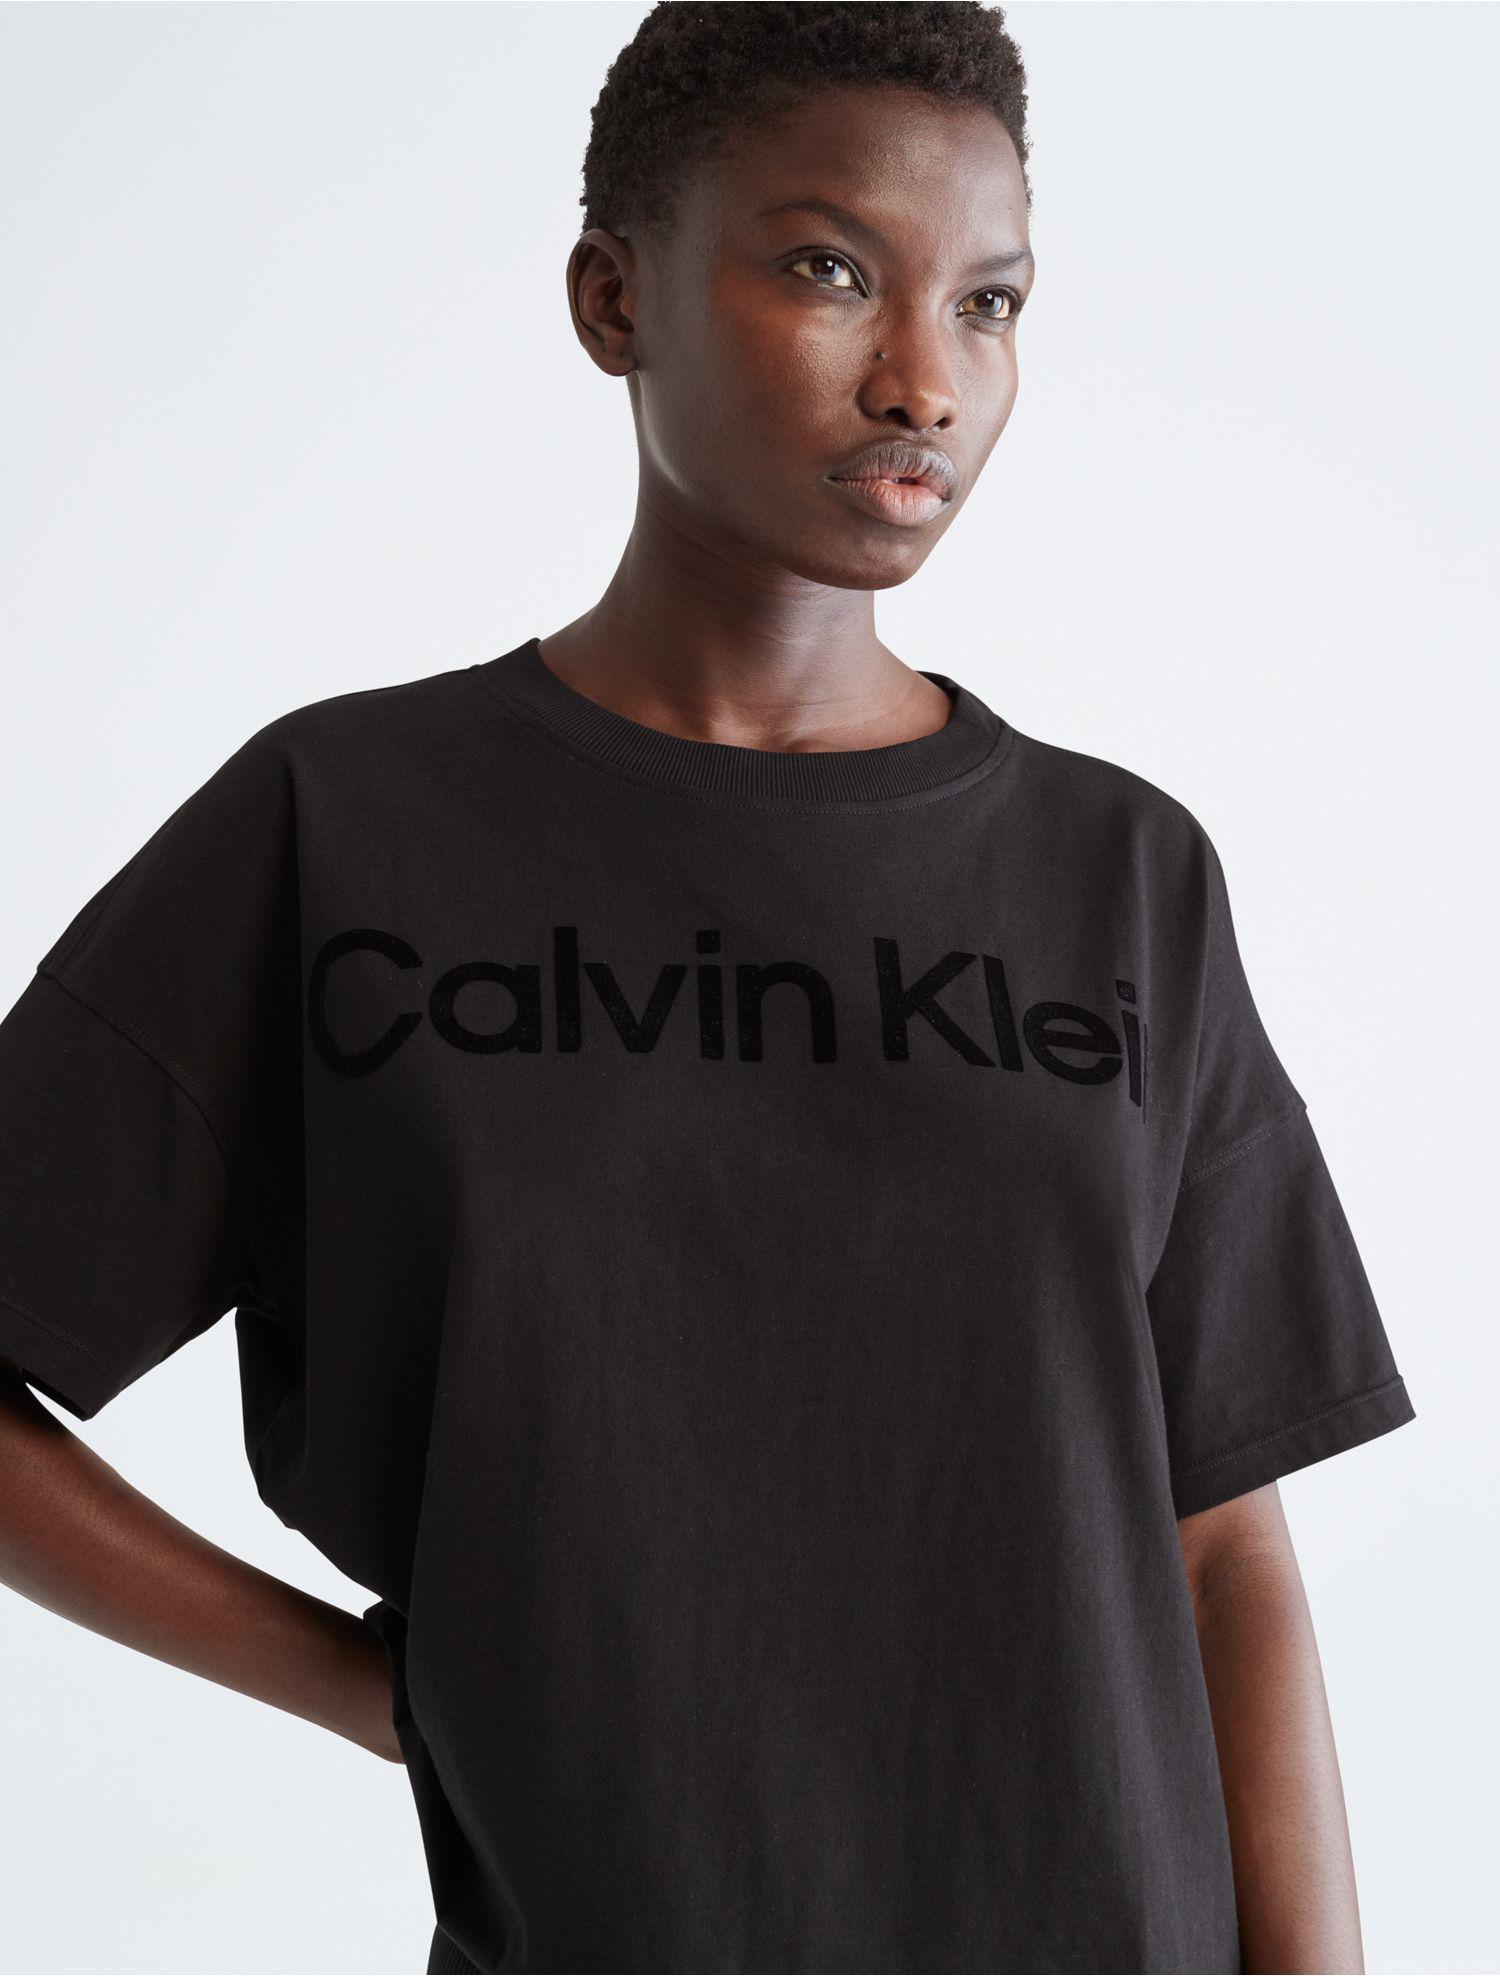 https://cdna.lystit.com/photos/calvinklein/21cc4eec/calvin-klein-Black-Performance-Flocked-Logo-T-shirt.jpeg